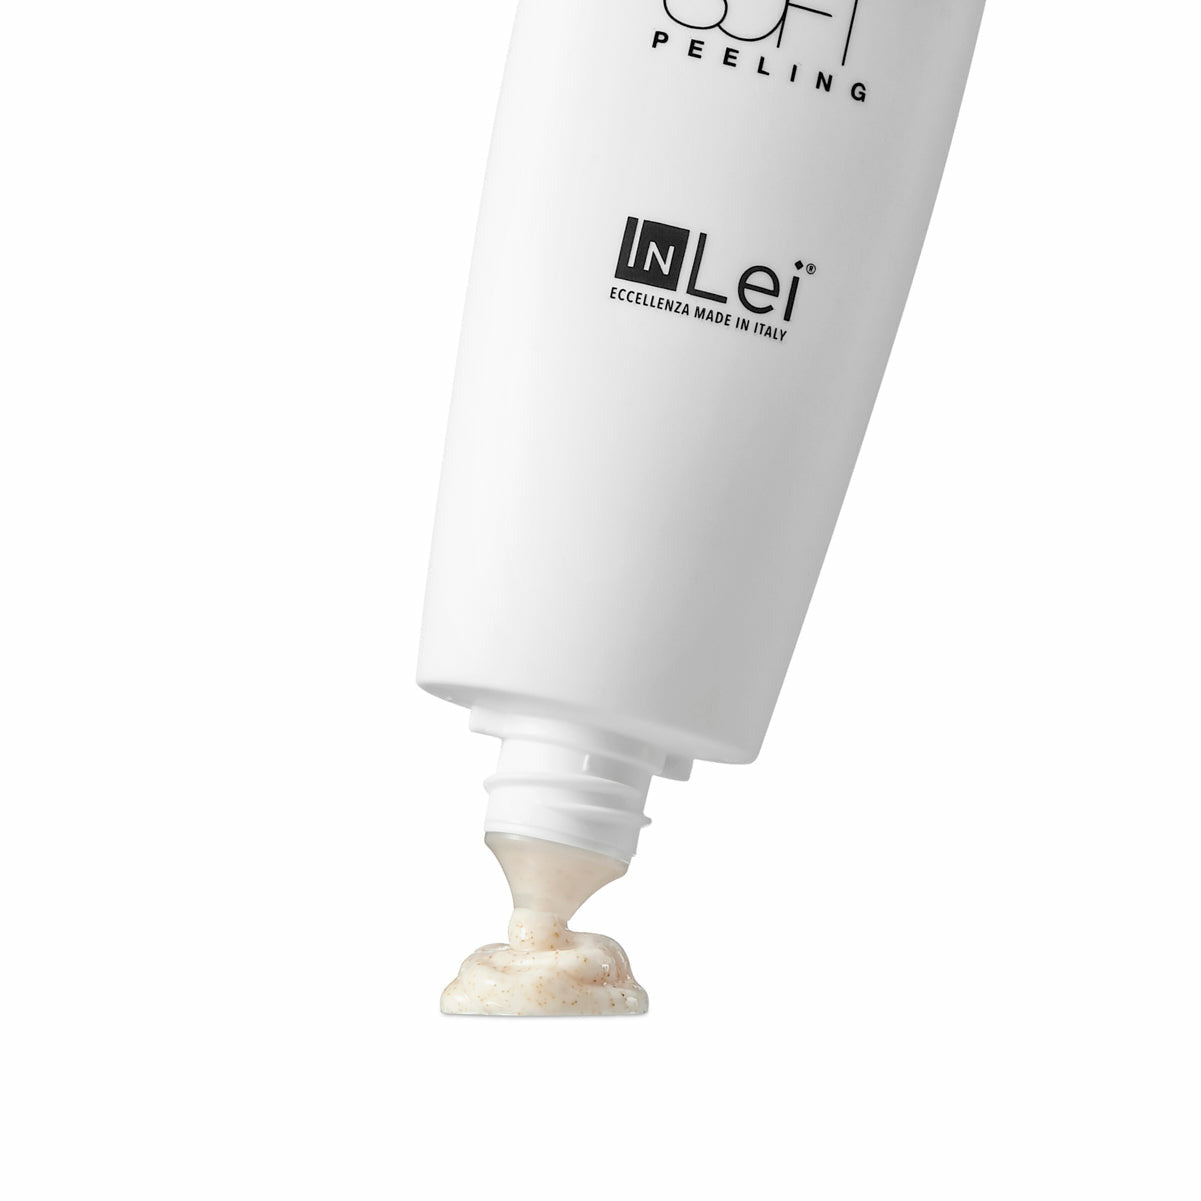 InLei® | Soft Peeling (Exfoliating Cleanser) EXP 10/23